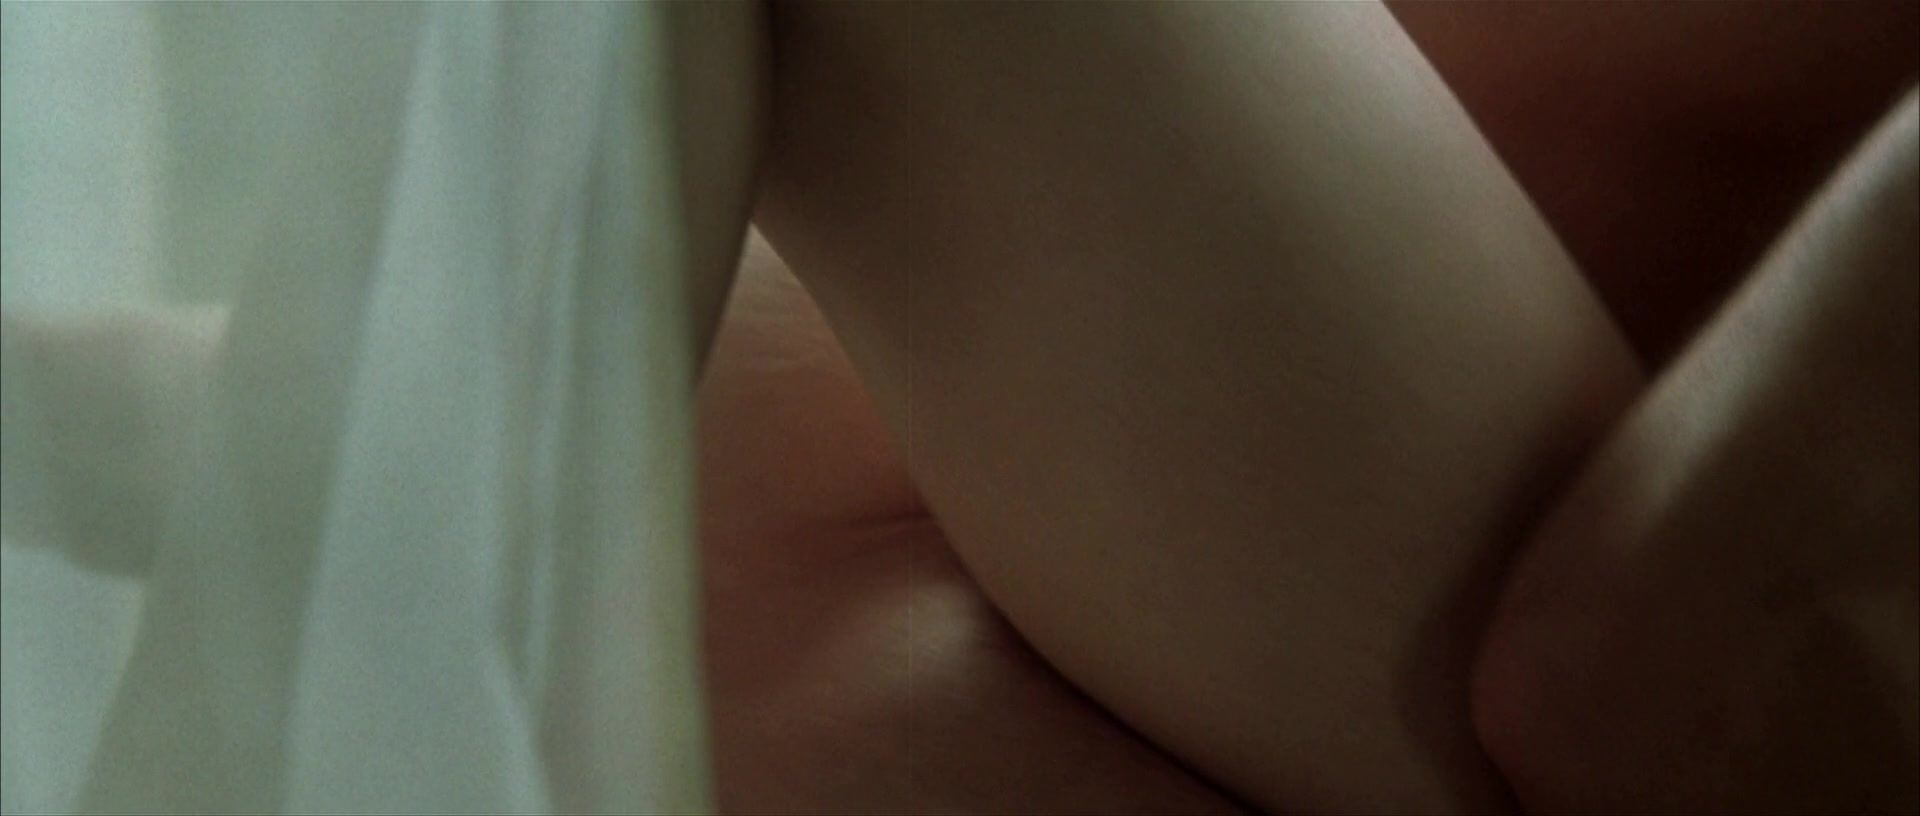 Big Butt Sex video Angelina Jolie's - ORIGINAL SIN Dyke - 1